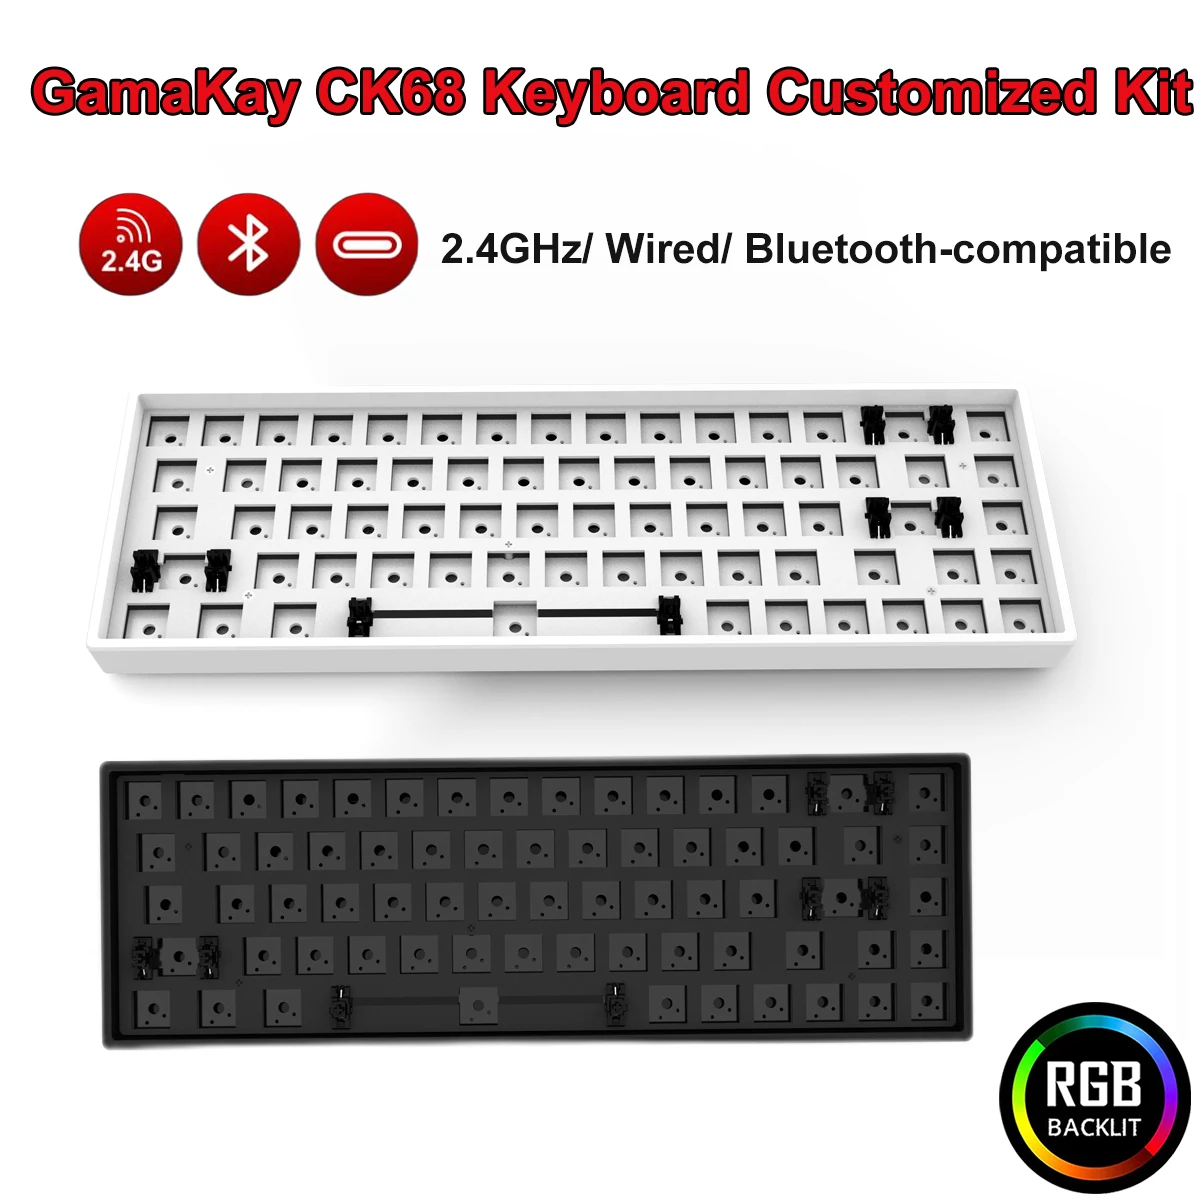 Gamakay ck68 teclado mecânico personalizado kit rgb quente swappable com fio/bluetooth-compatível/2.4ghz pcb 65% nkro teclado kit